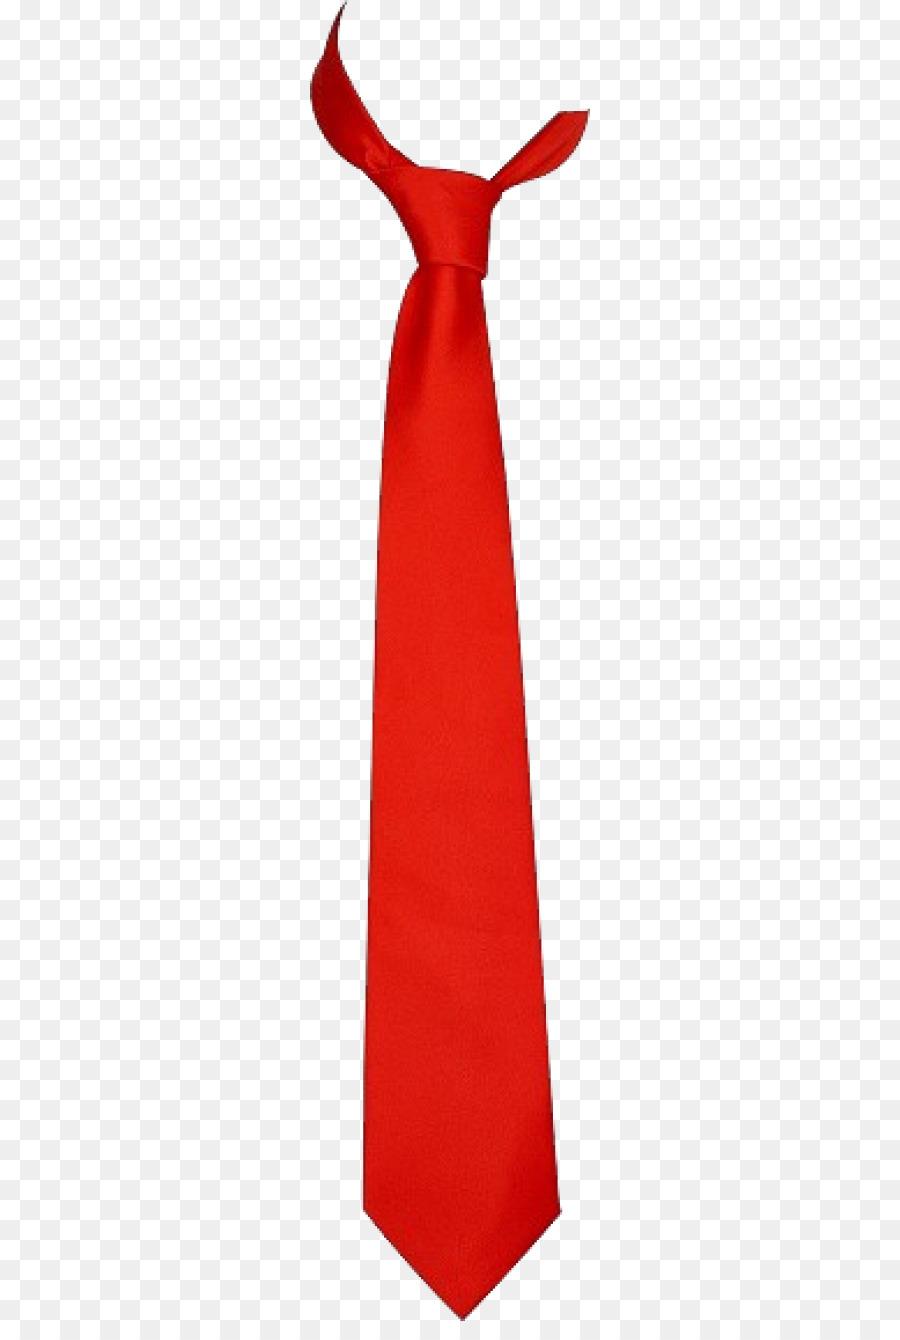 Necktie Bow tie Red Clip art - Red Tie Png png download - 280*1321 - Free Transparent Necktie png Download.